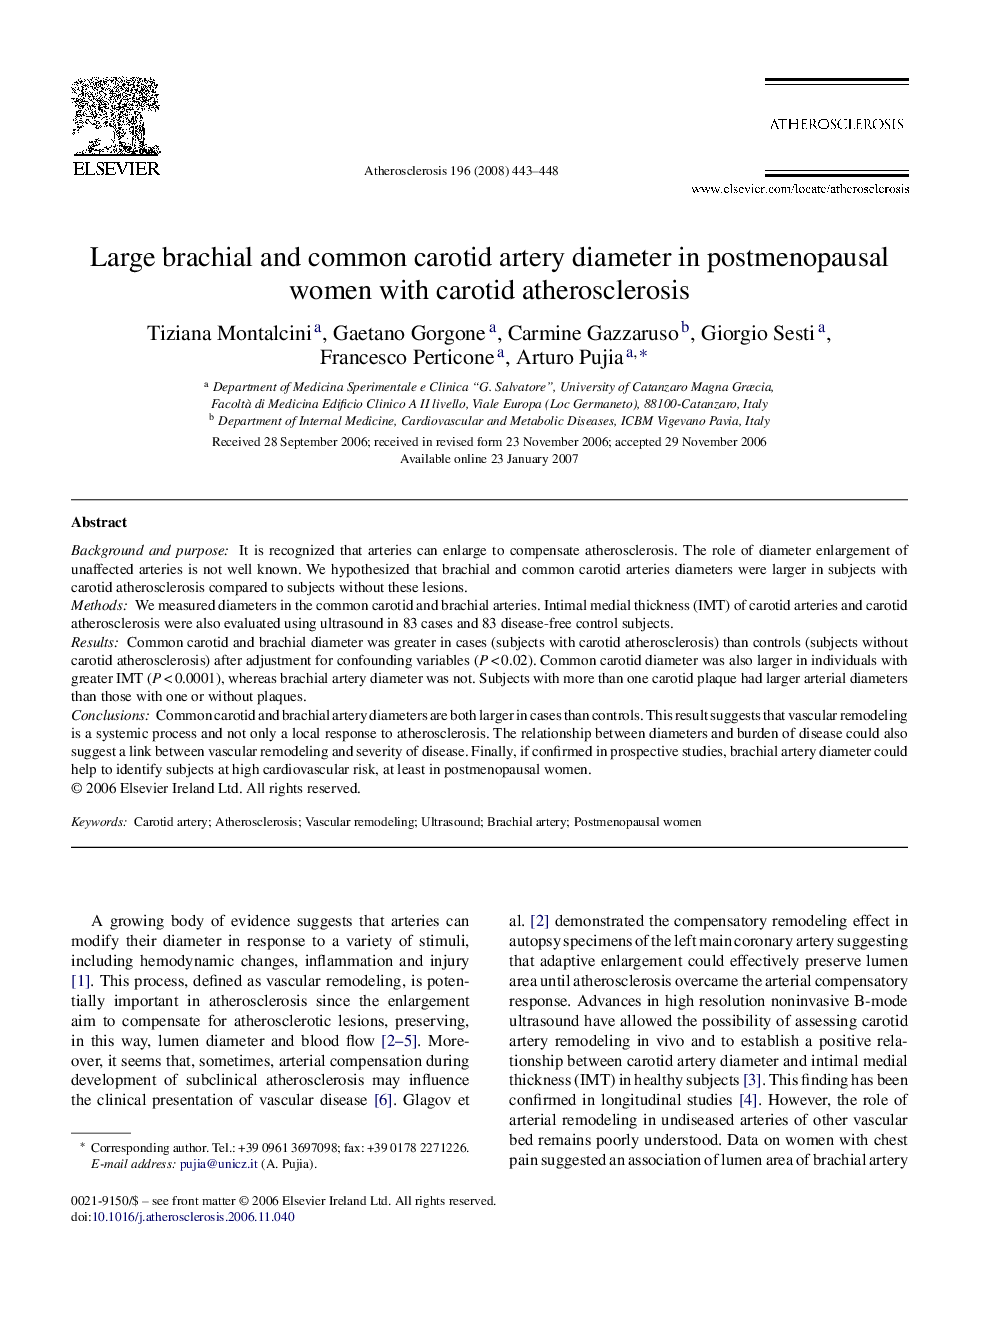 Large brachial and common carotid artery diameter in postmenopausal women with carotid atherosclerosis